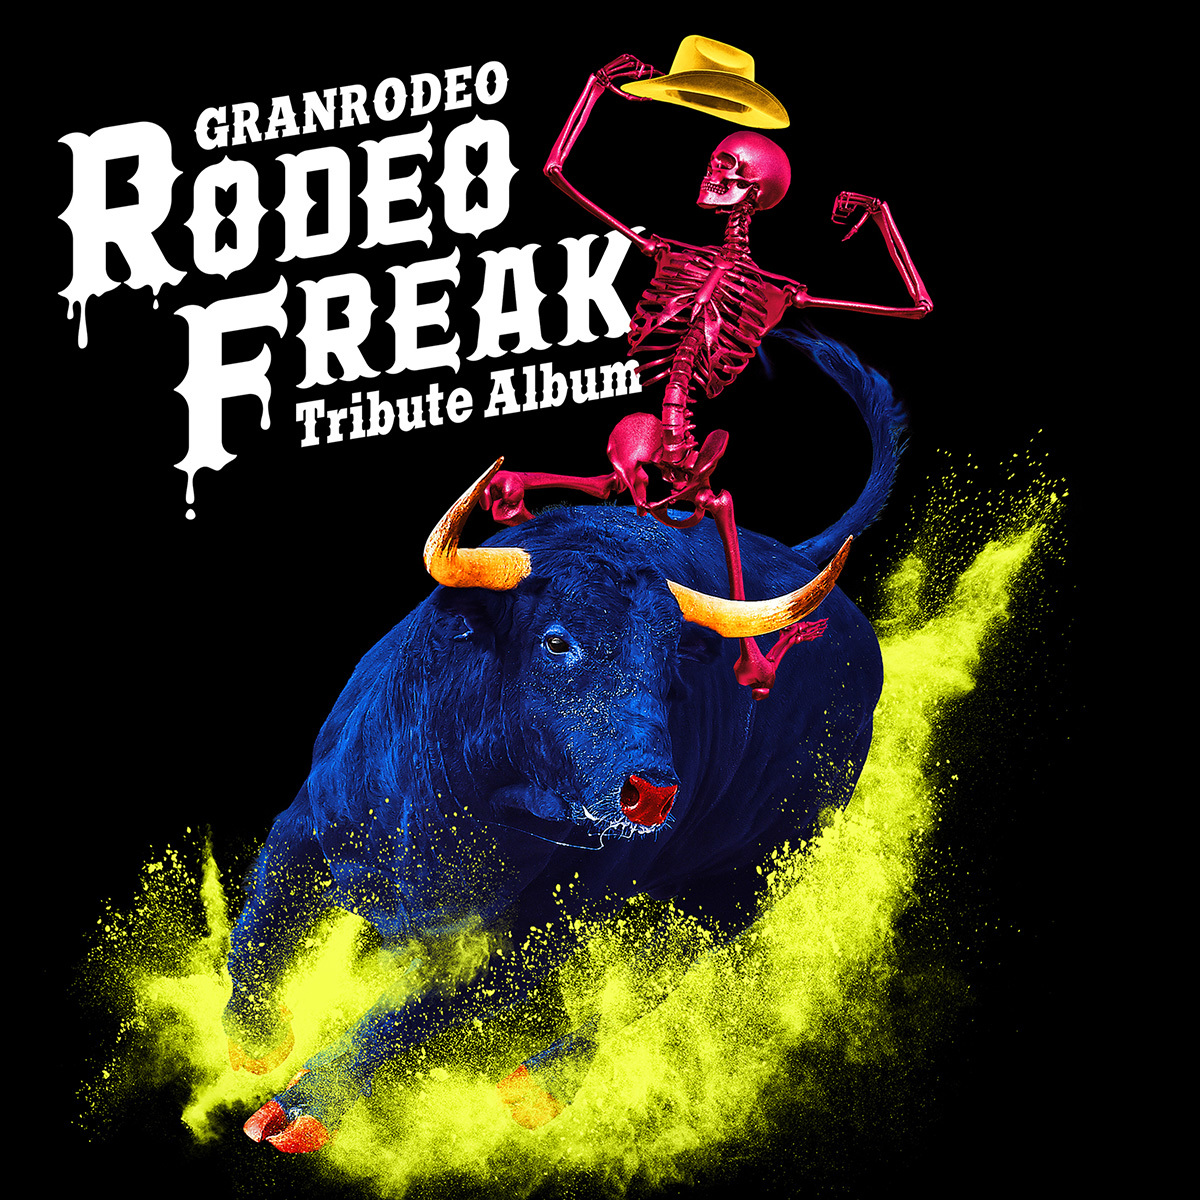 Granrodeo Tribute Album Rodeo Freak 収録内容決定 参加アーティストからのコメント到着 店舗特典デザイン公開 Spice エンタメ特化型情報メディア スパイス